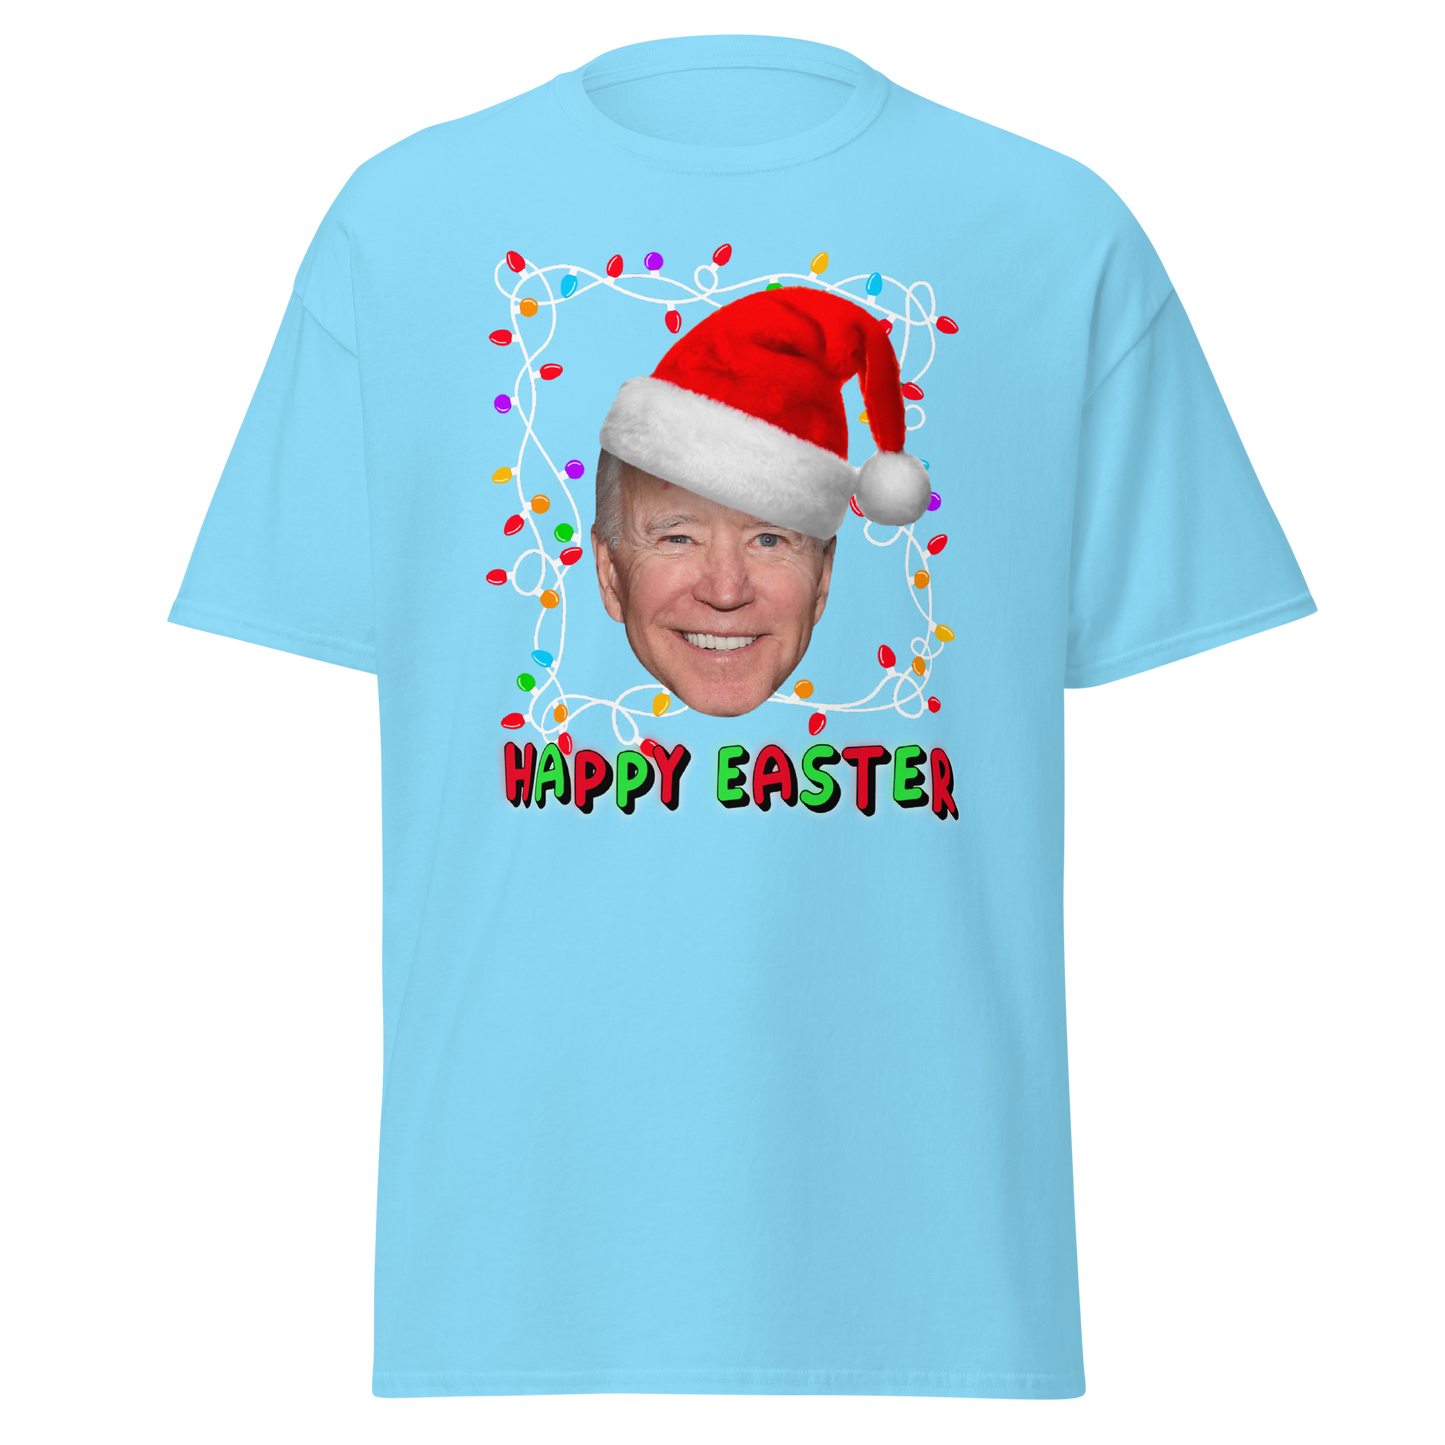 Joe's Christmas T-Shirt